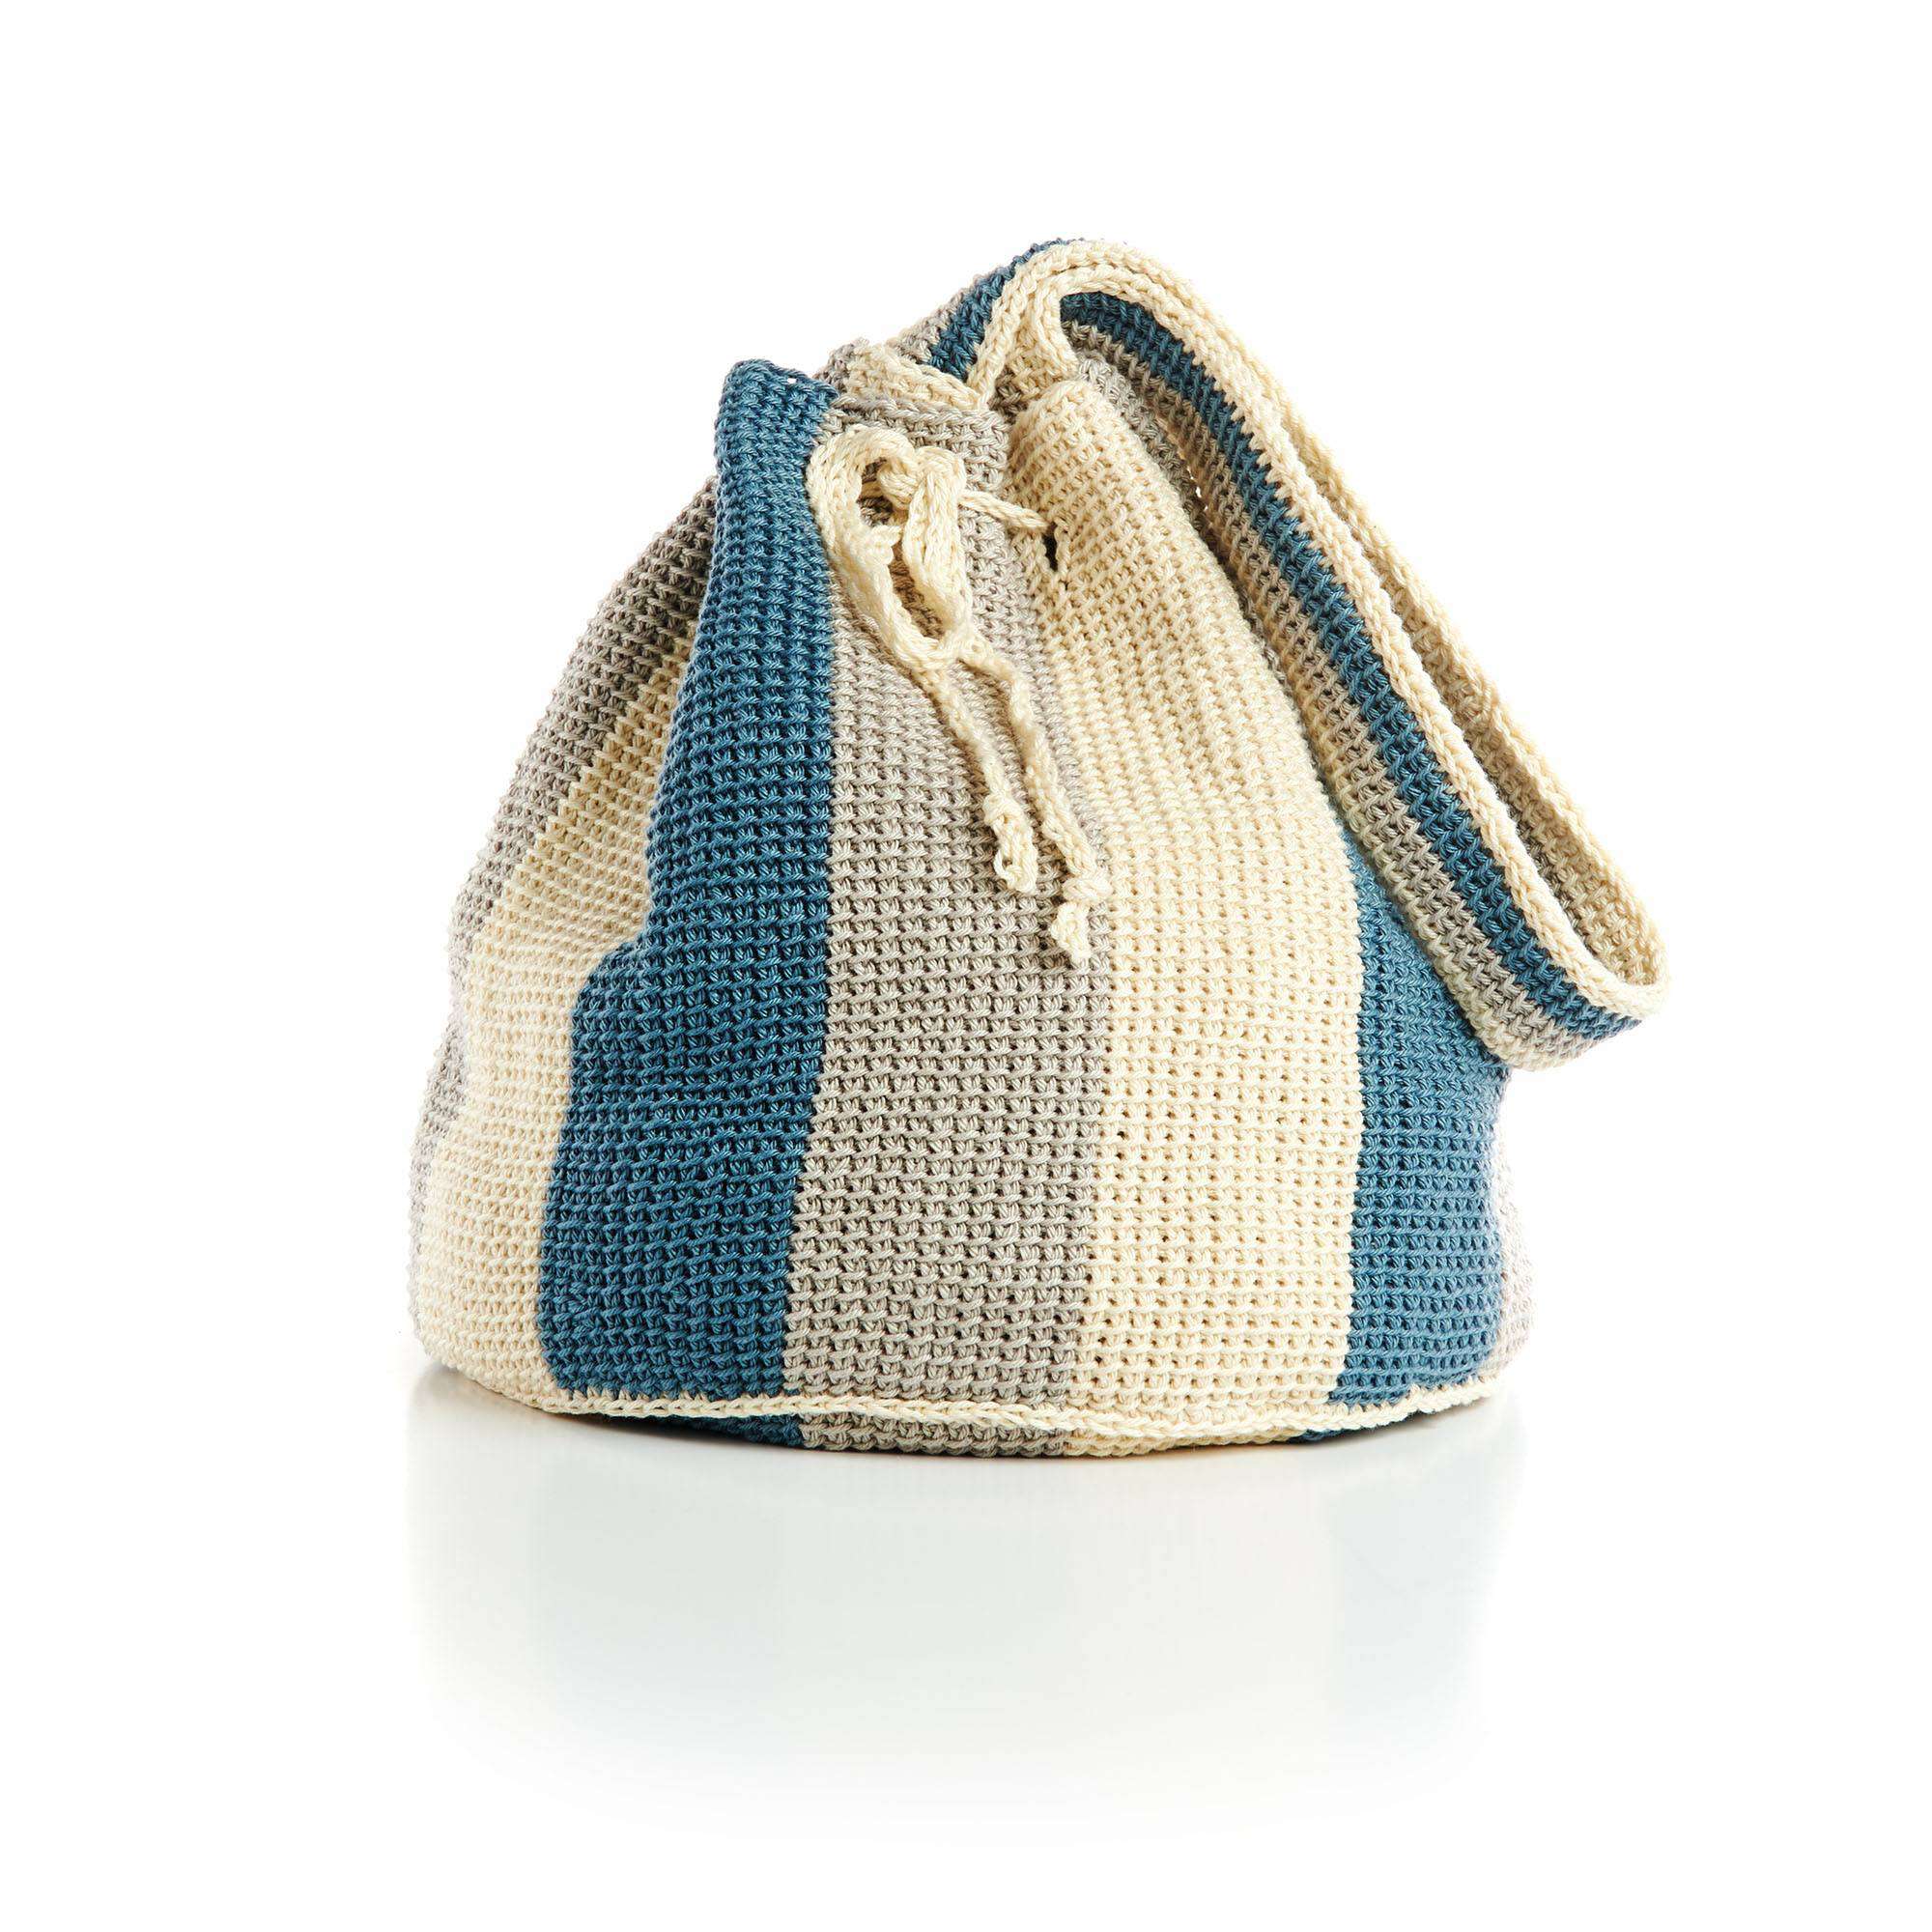 Patons Pinwheel Bottom Tunisian Crochet Bag​ Pattern | Yarnspirations